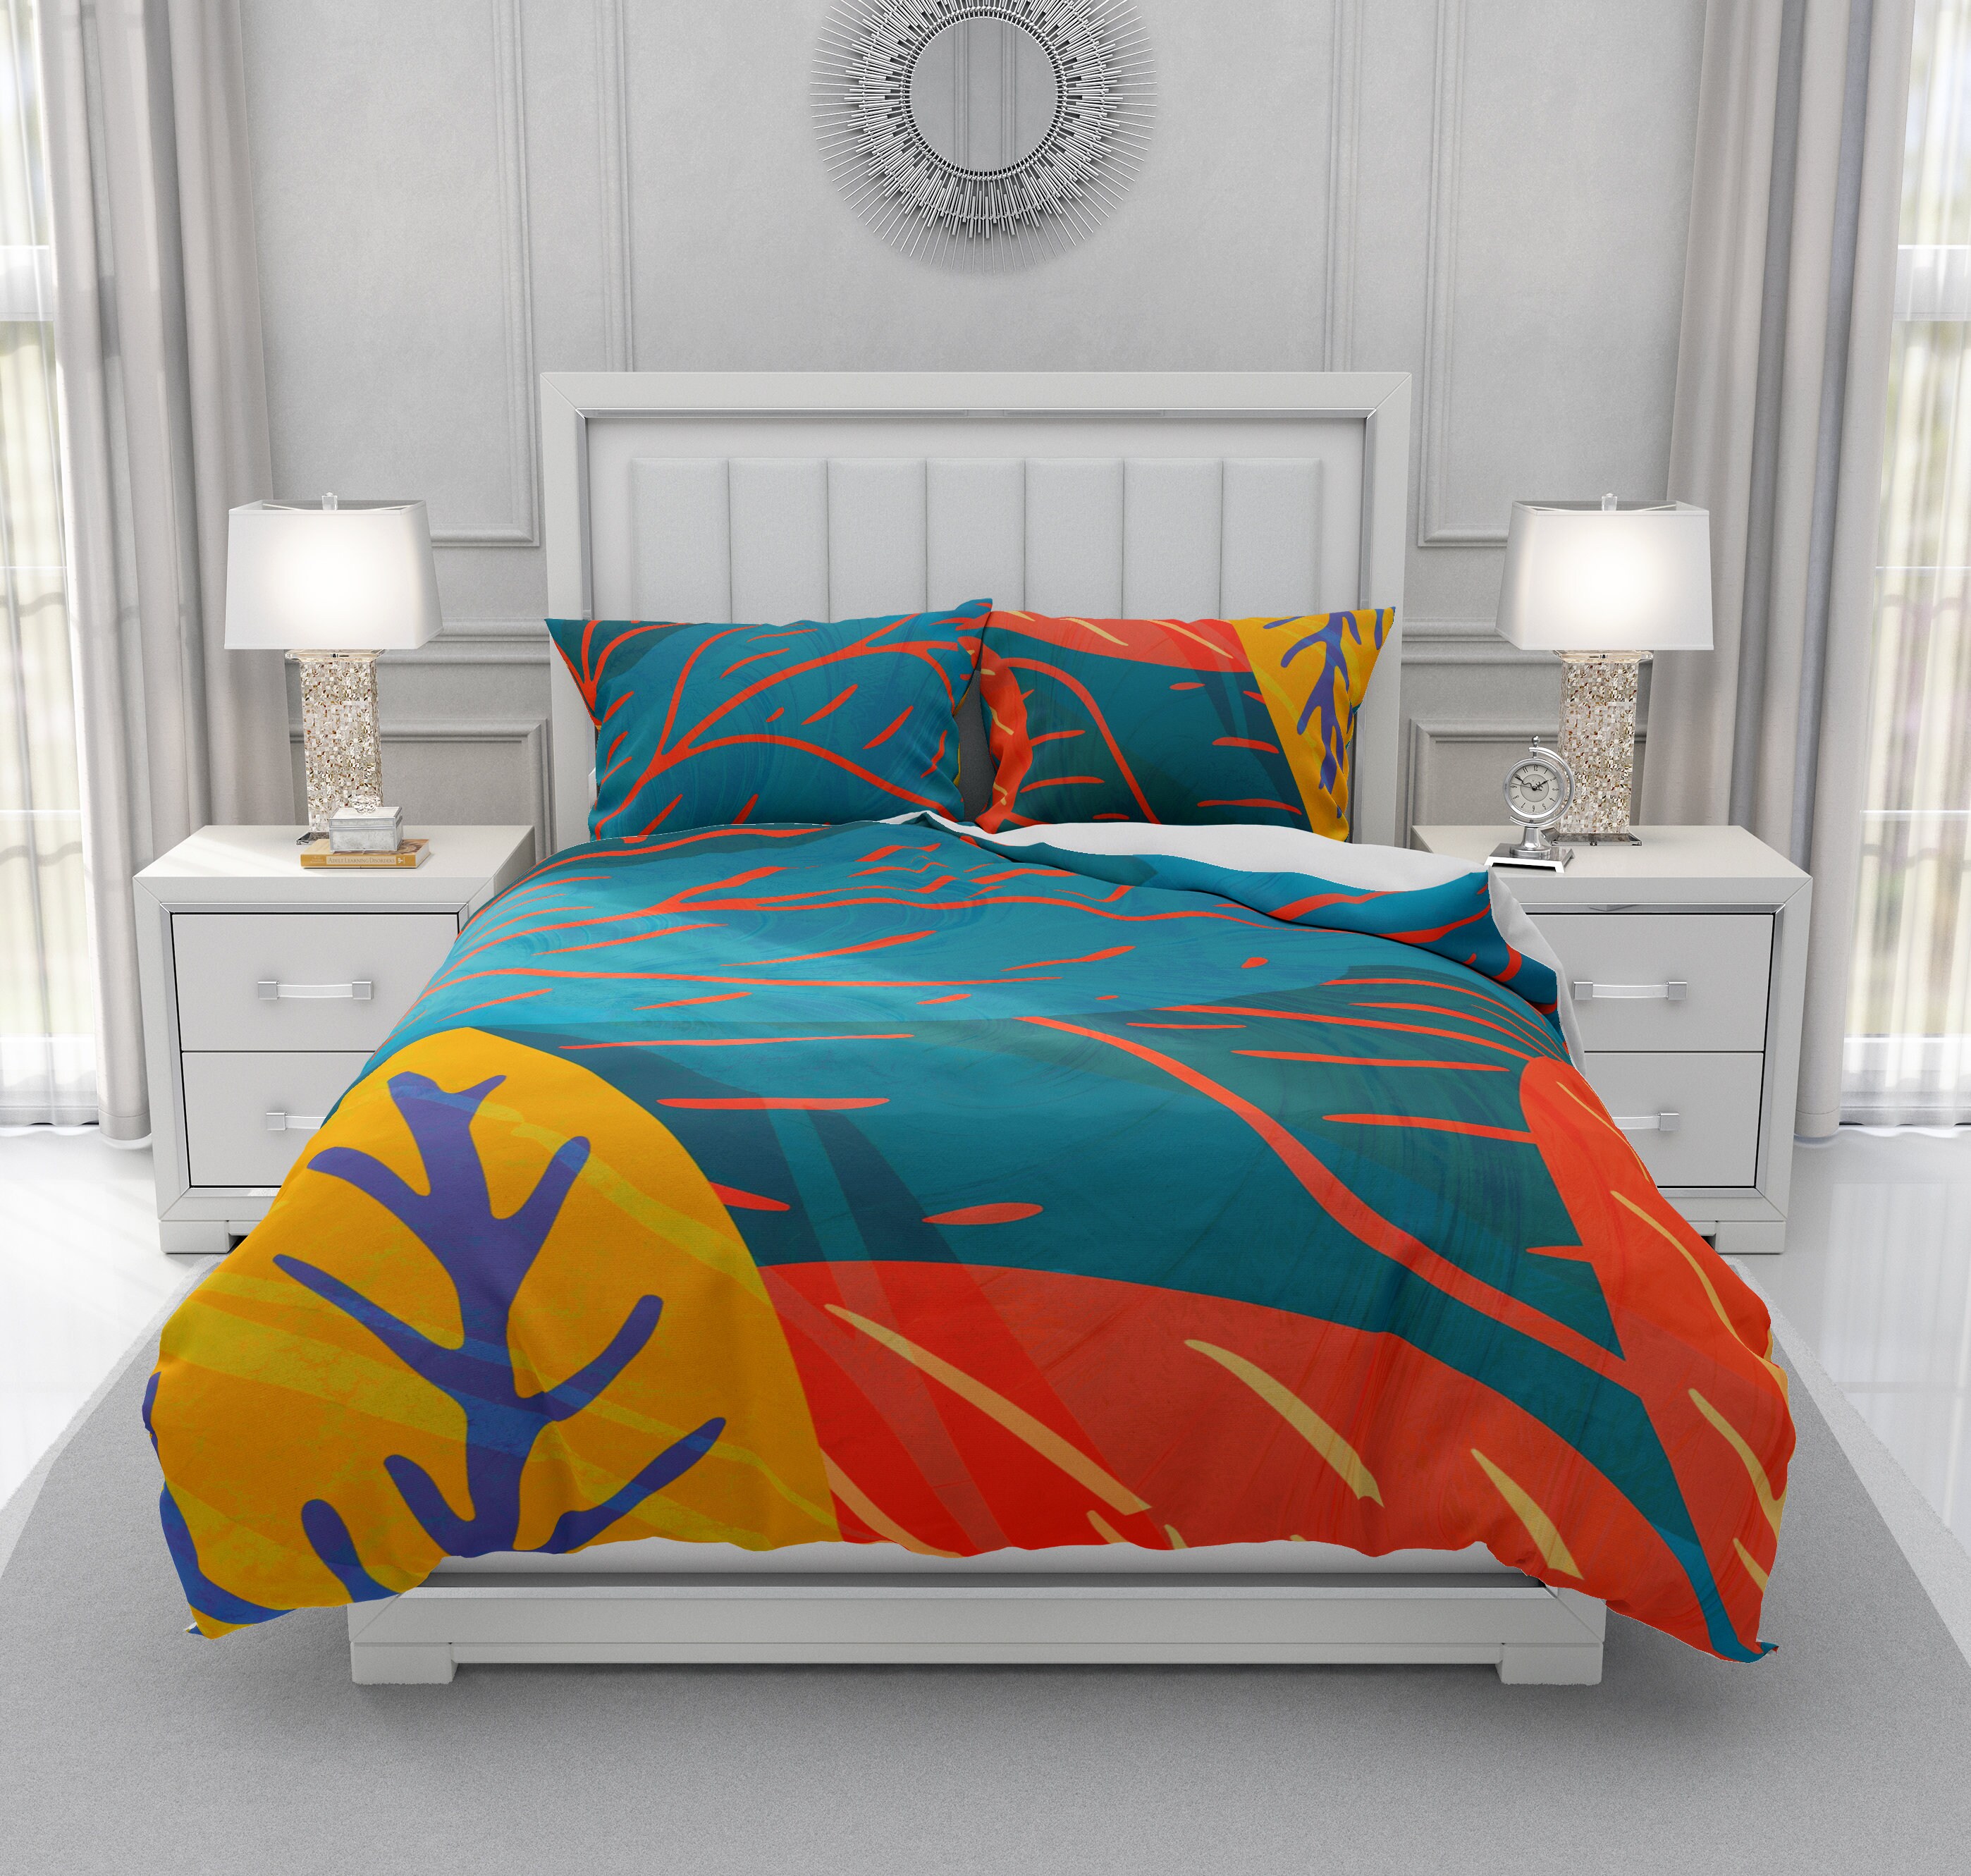 Memphis Autumn Bedding Abstract Comforter Colorful Duvet Cover